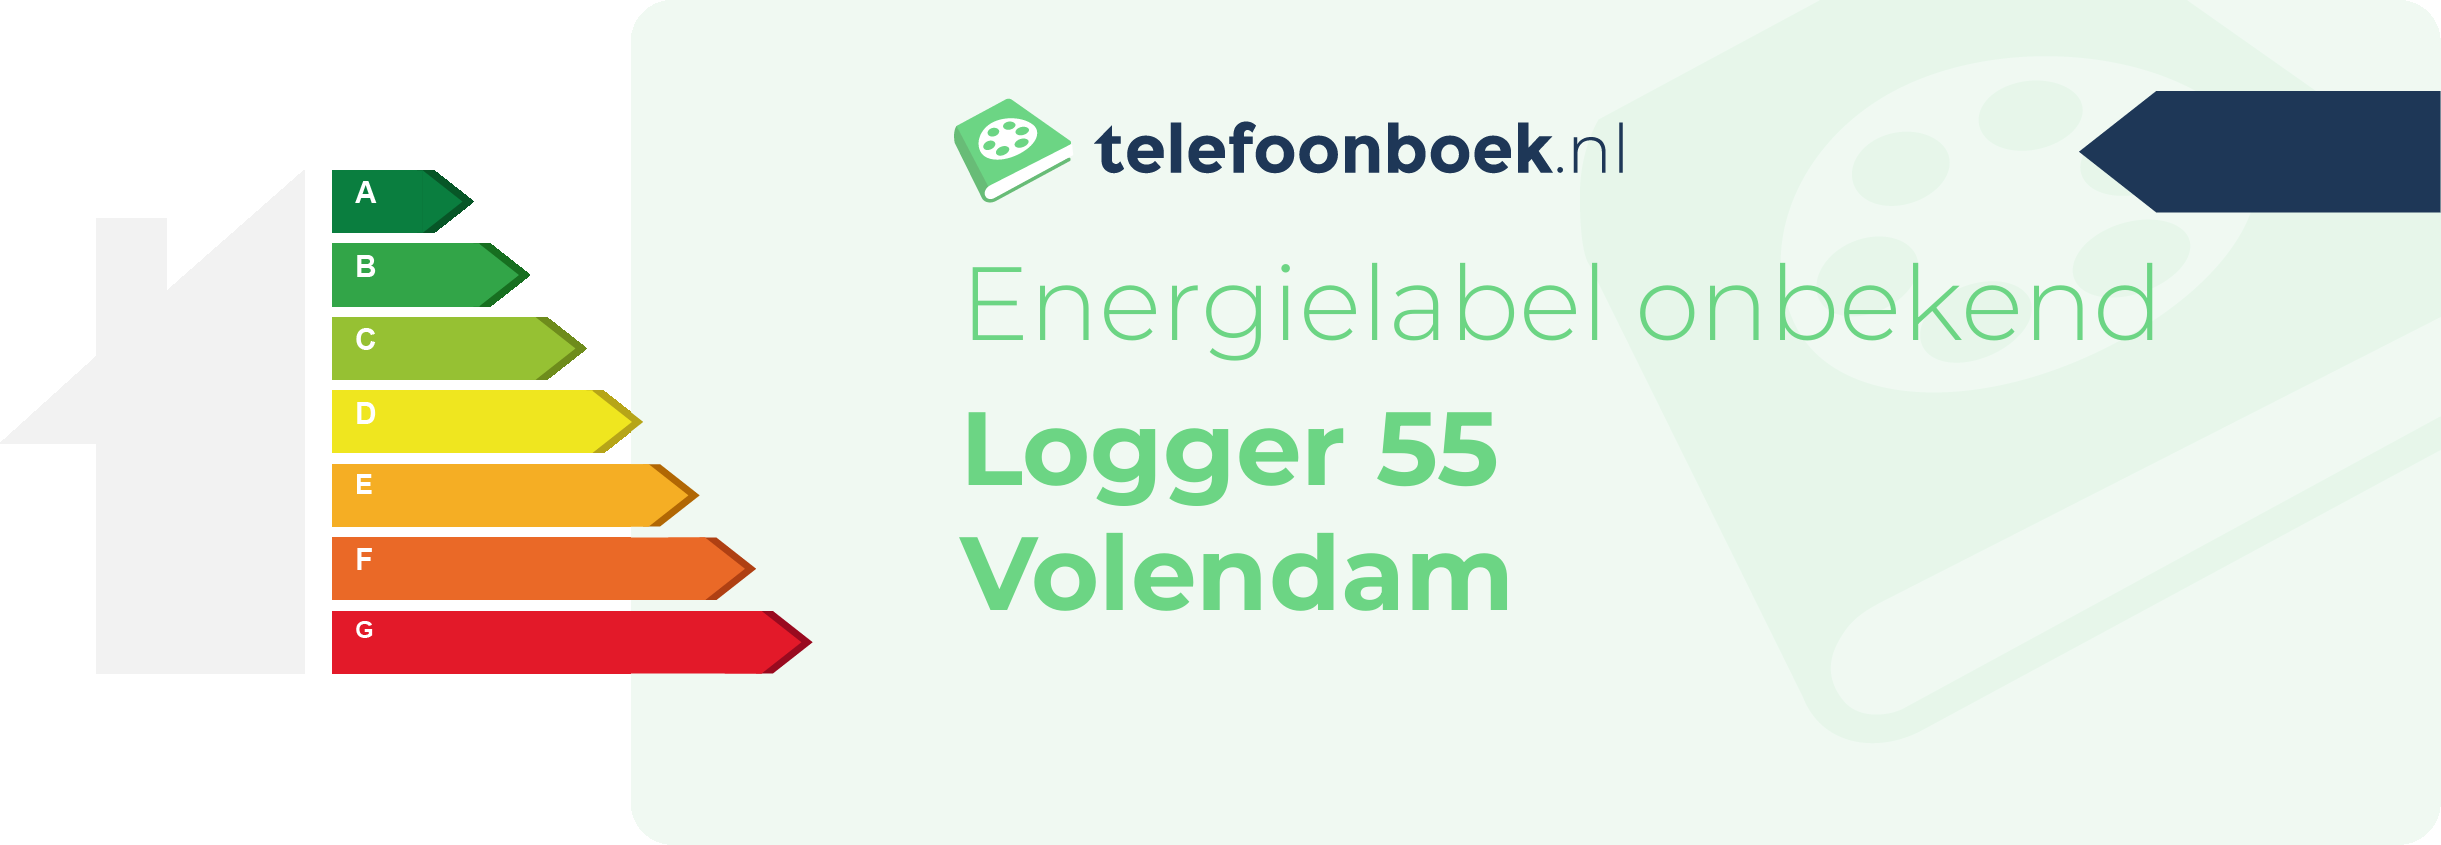 Energielabel Logger 55 Volendam